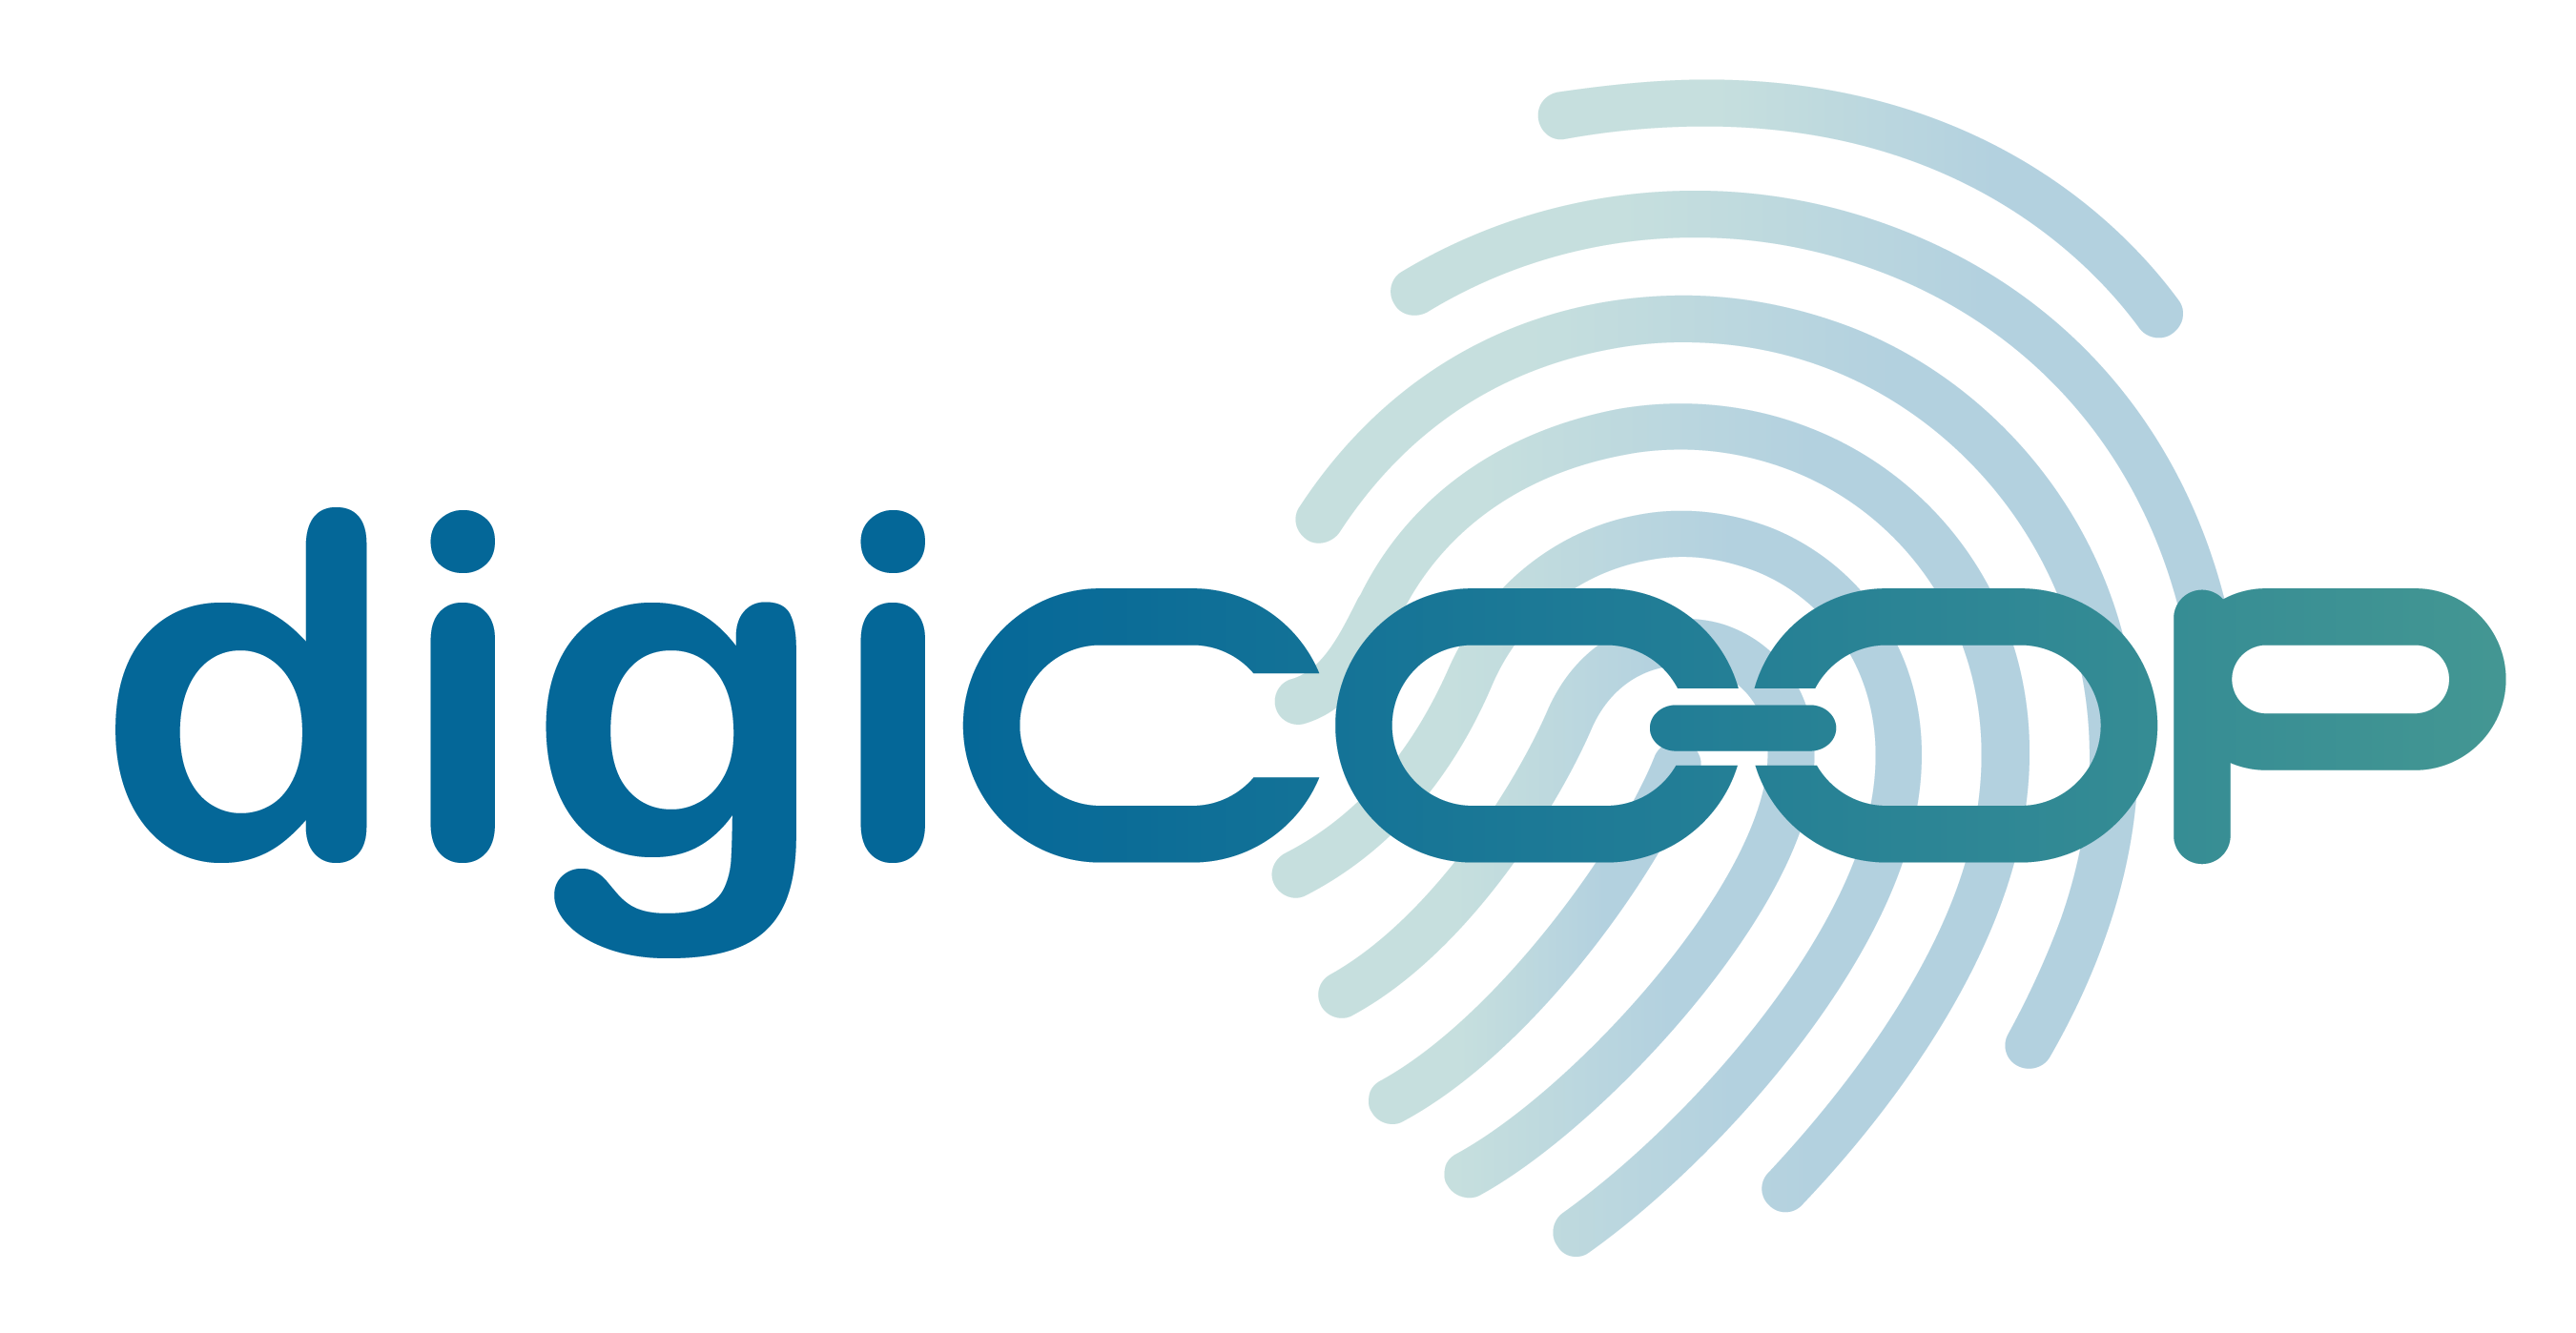 Digicoop logo